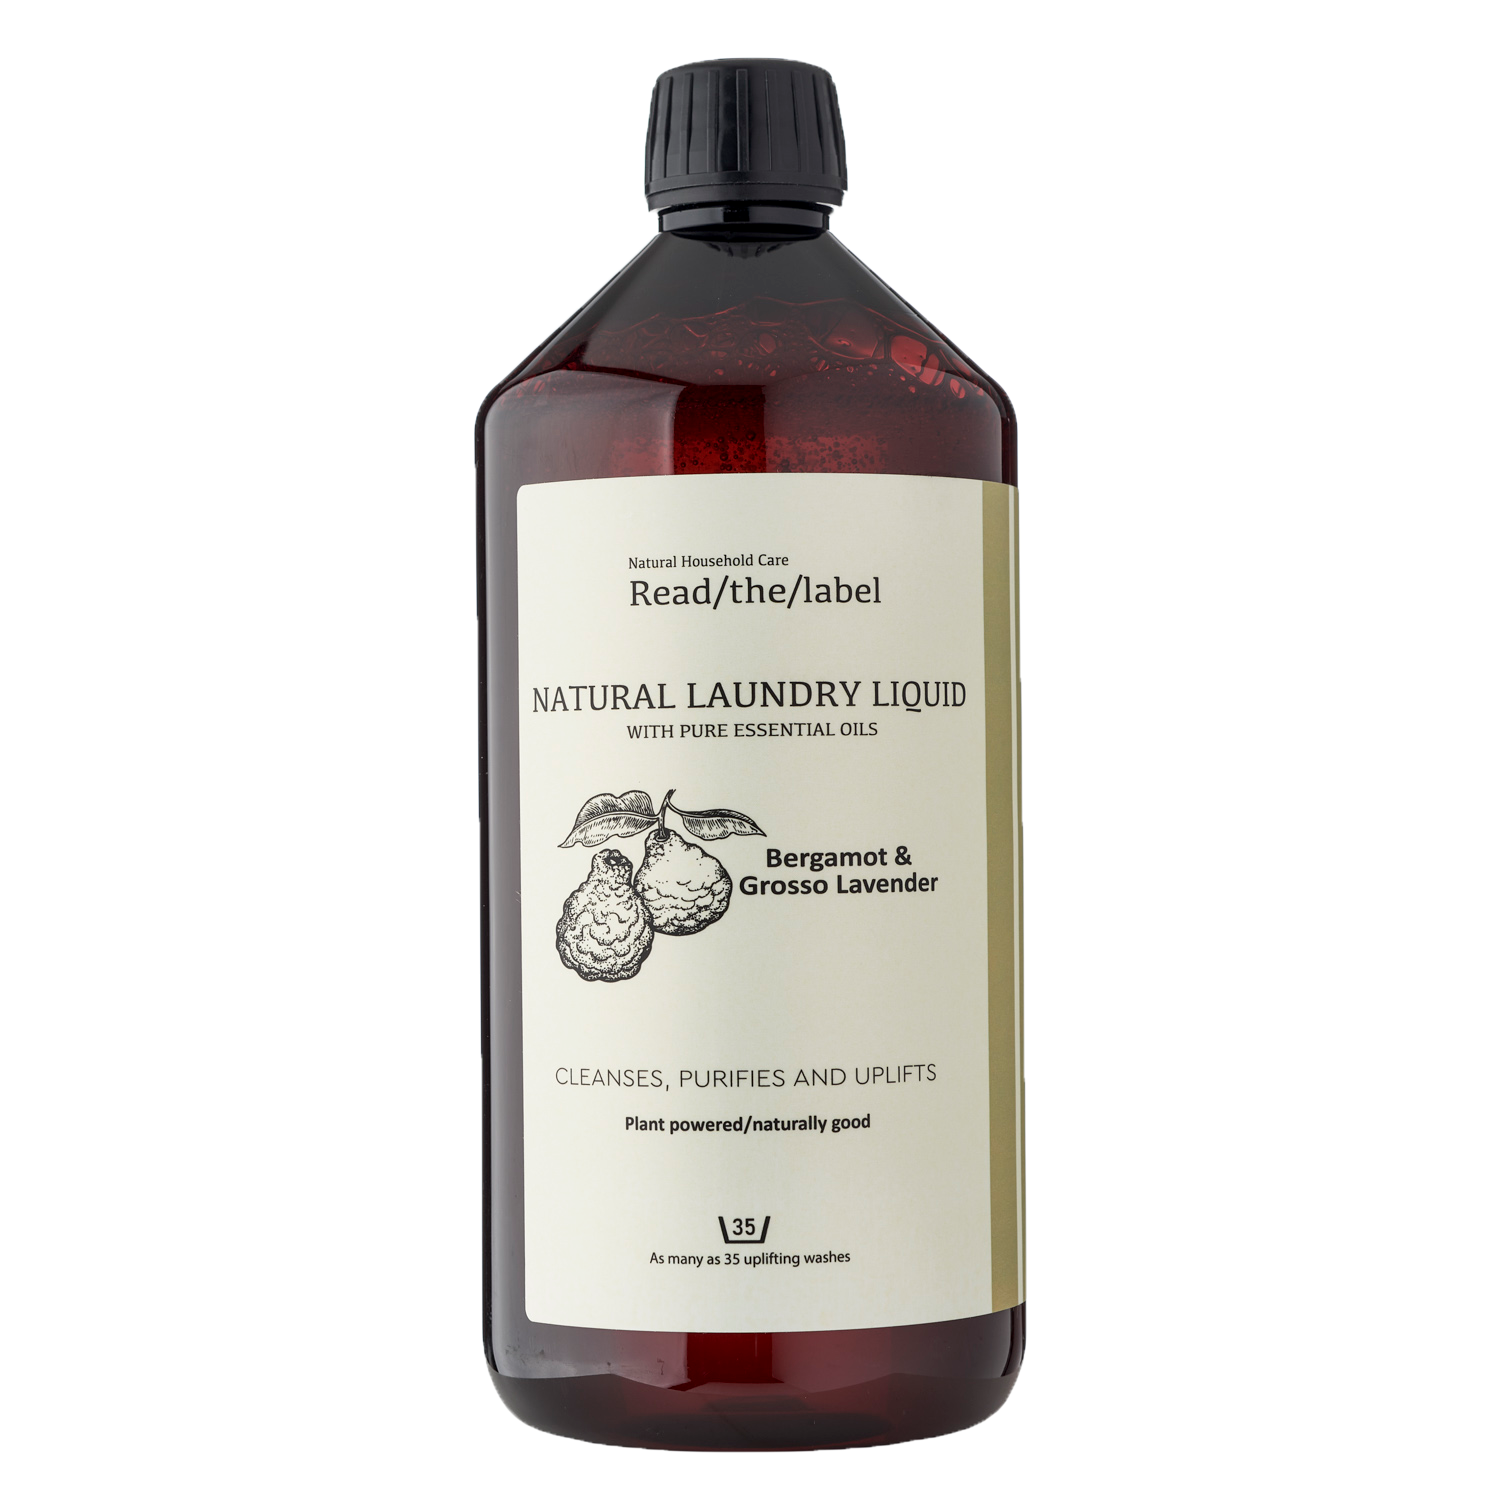 Natural laundry Liquid